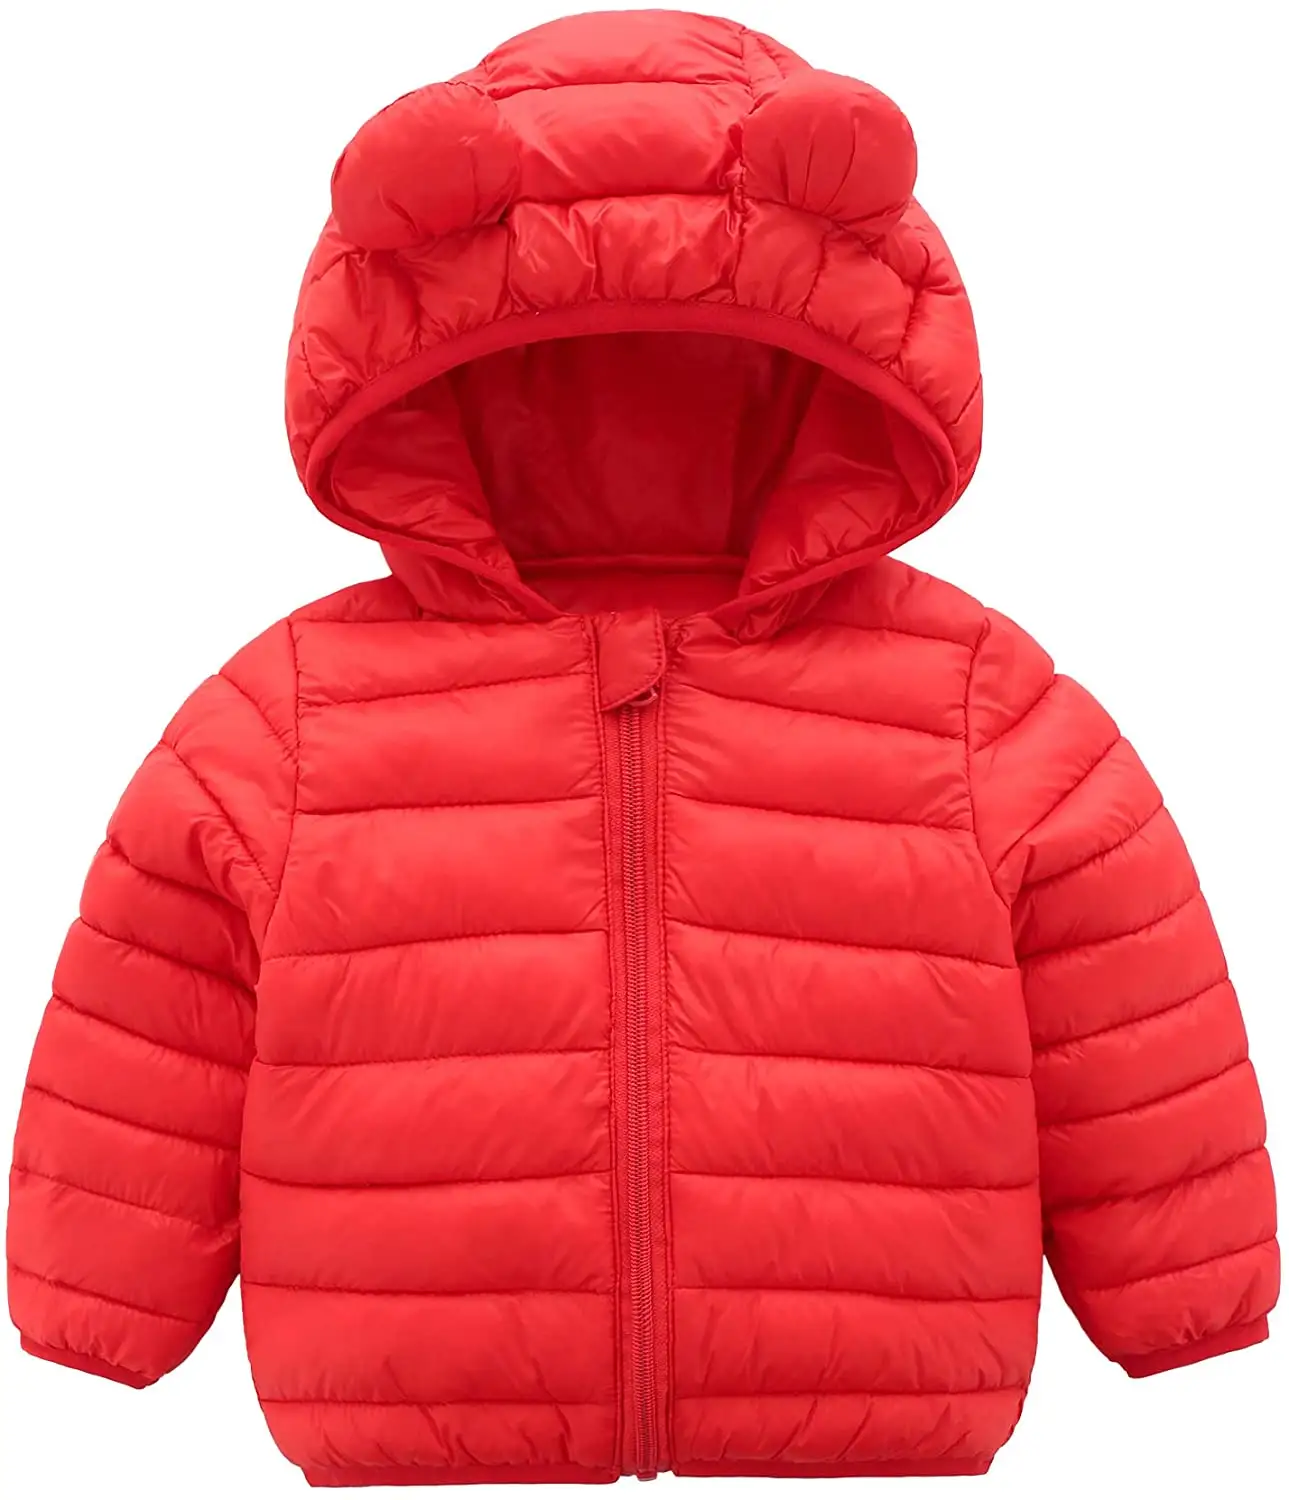 Mantel Musim Dingin untuk Anak-anak, Jaket Puffer Ringan dengan Kerudung untuk Bayi Laki-laki Perempuan, Bayi, Balita